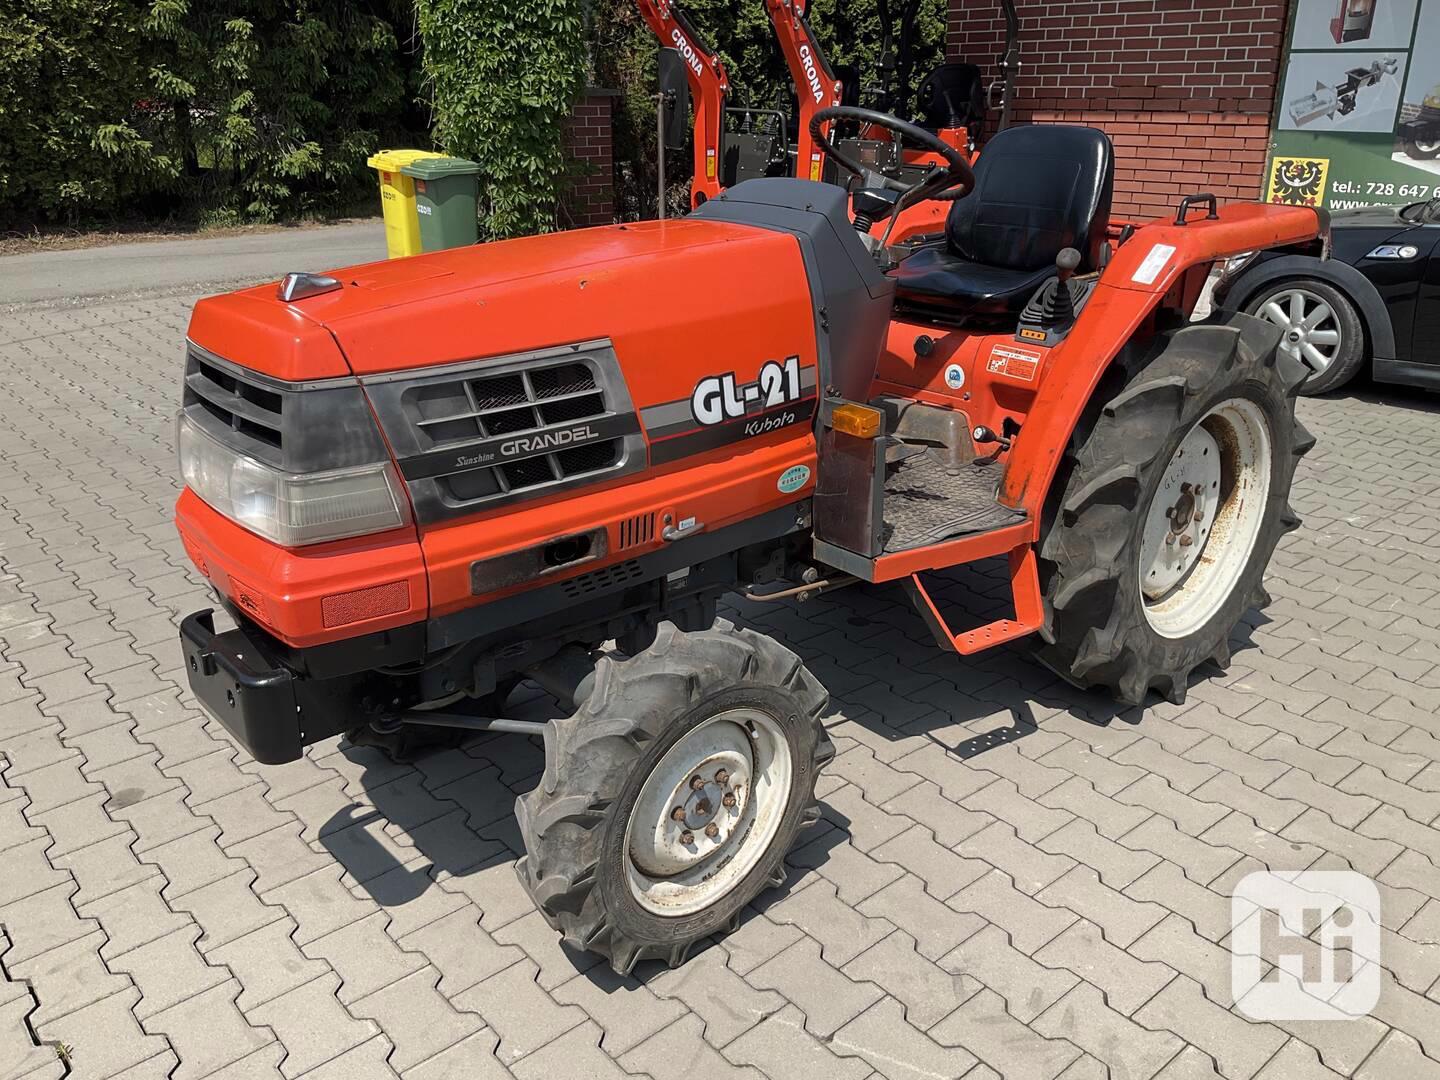 Traktor Kubota GL-21, výkon 21 Hp, pohon 4x4 - foto 1